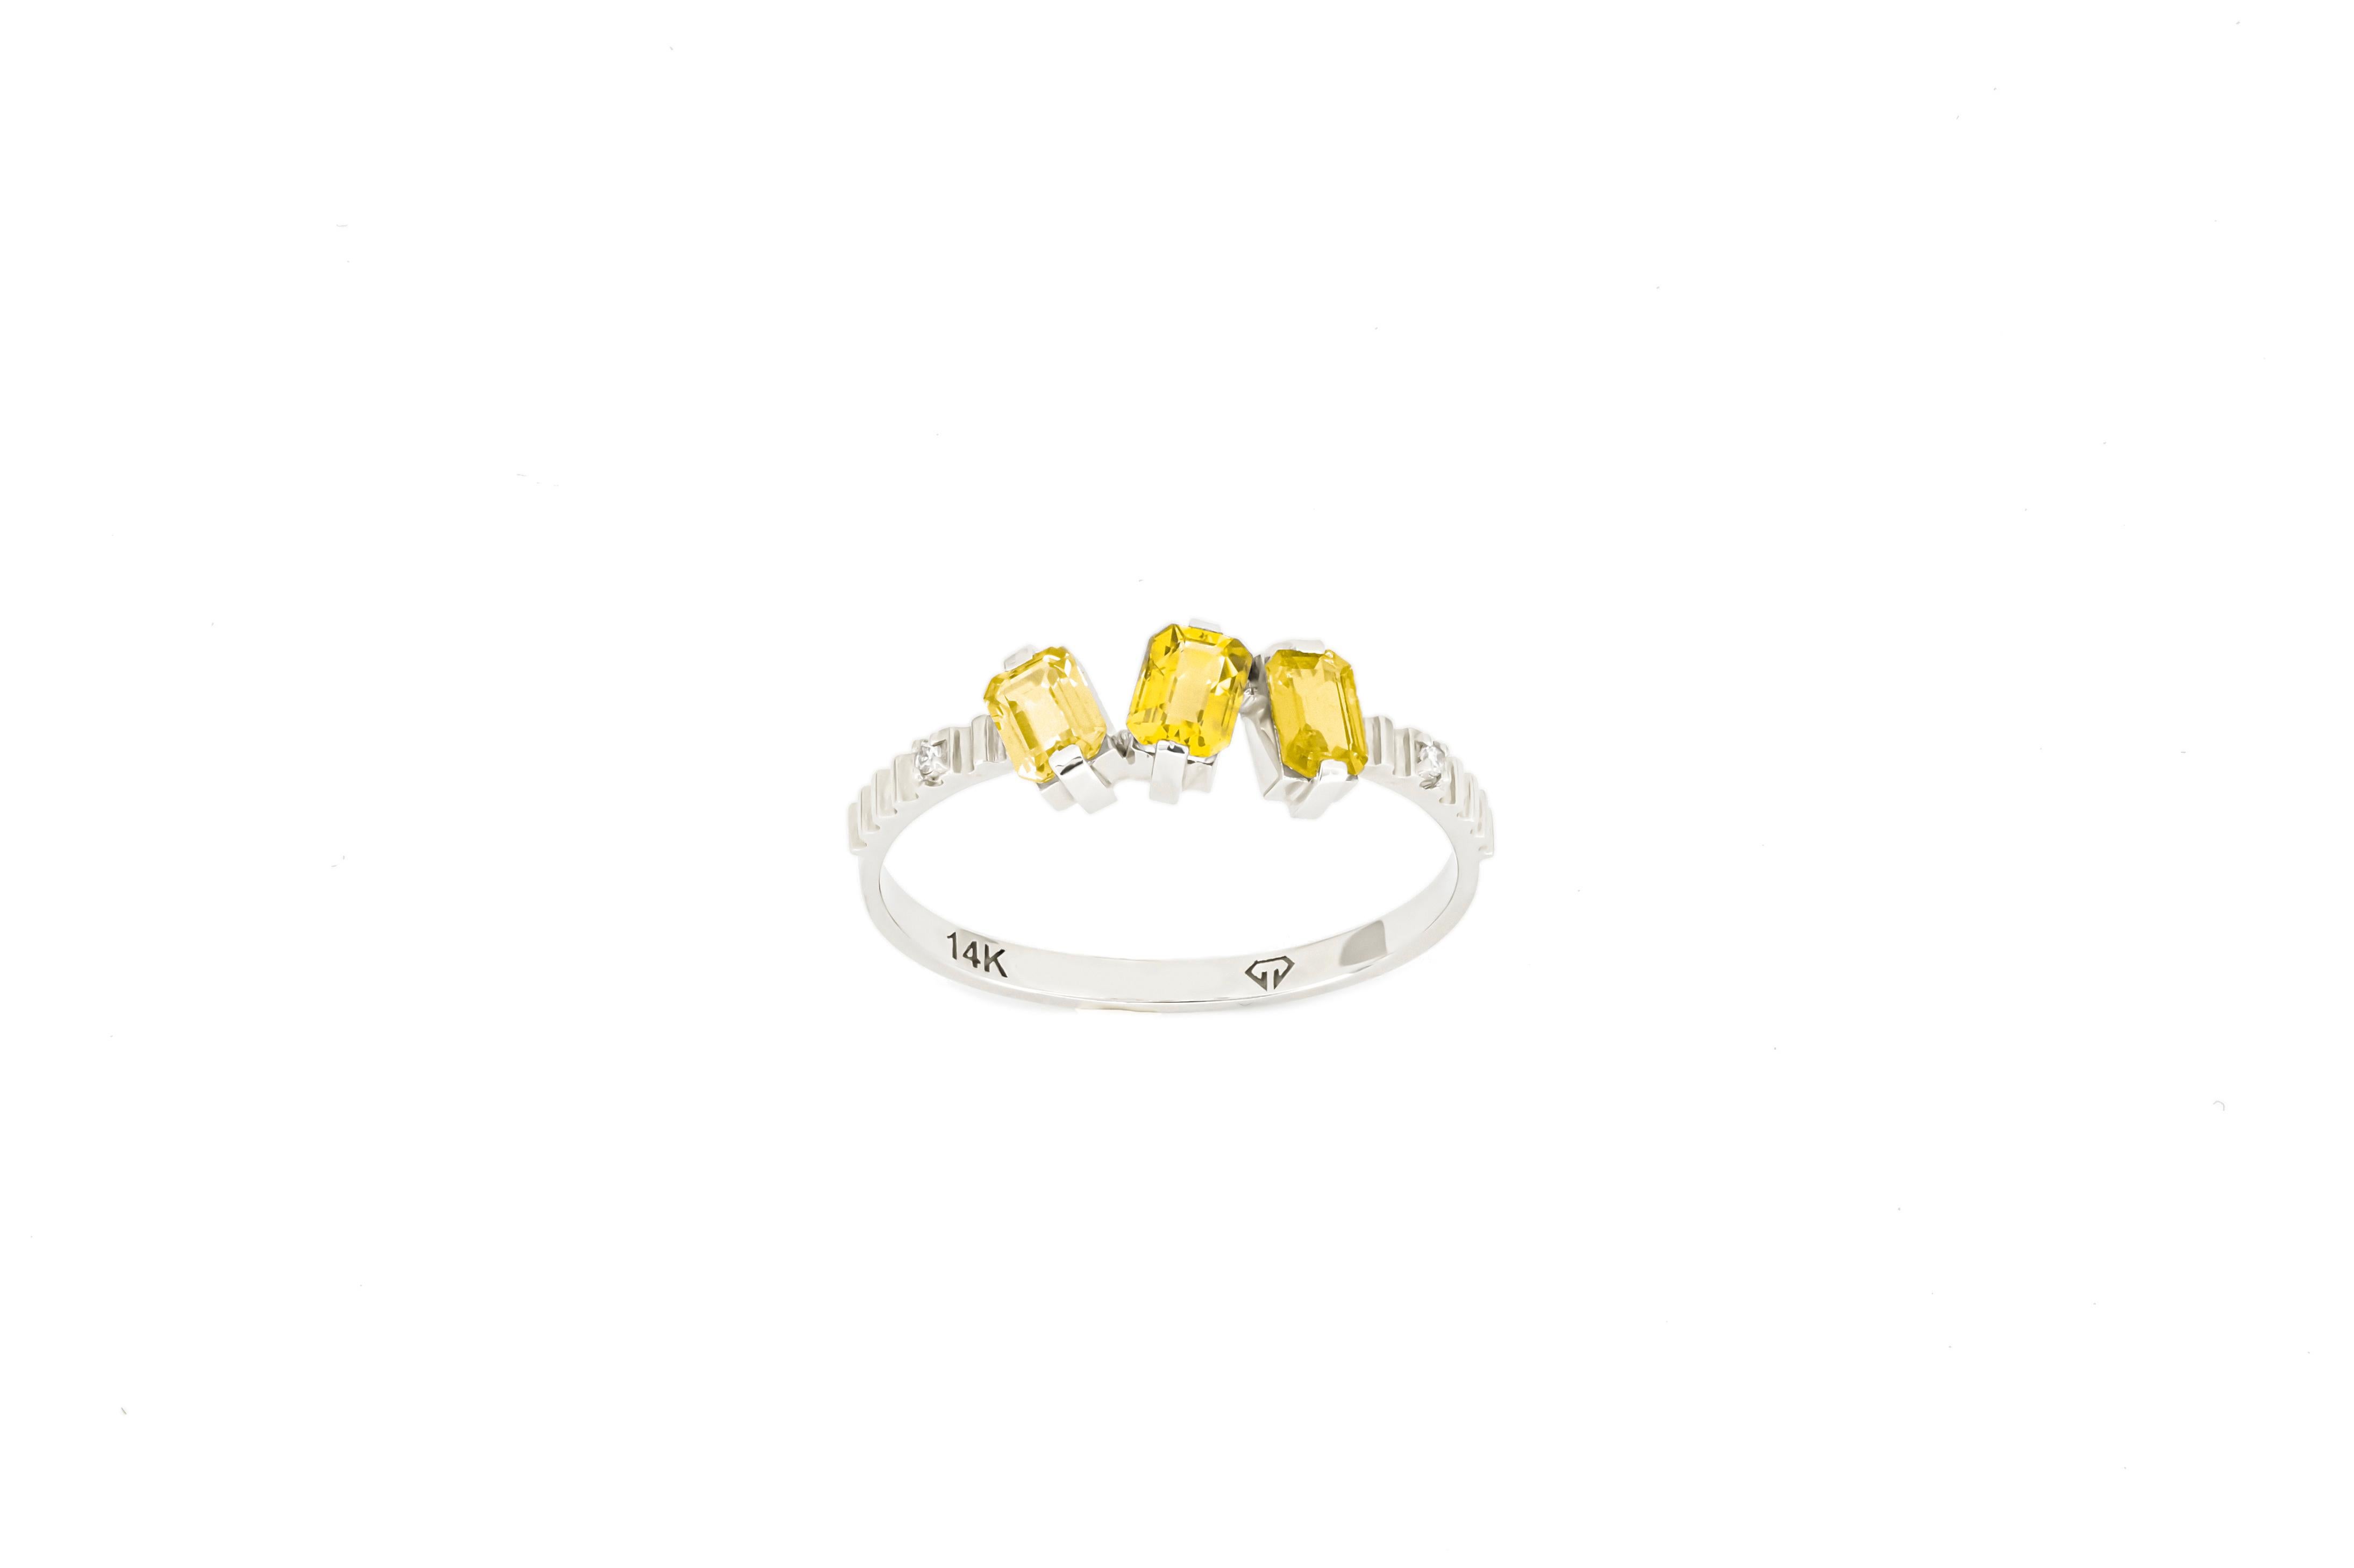 For Sale:  Monochrome yellow gemstone 14k ring. 5